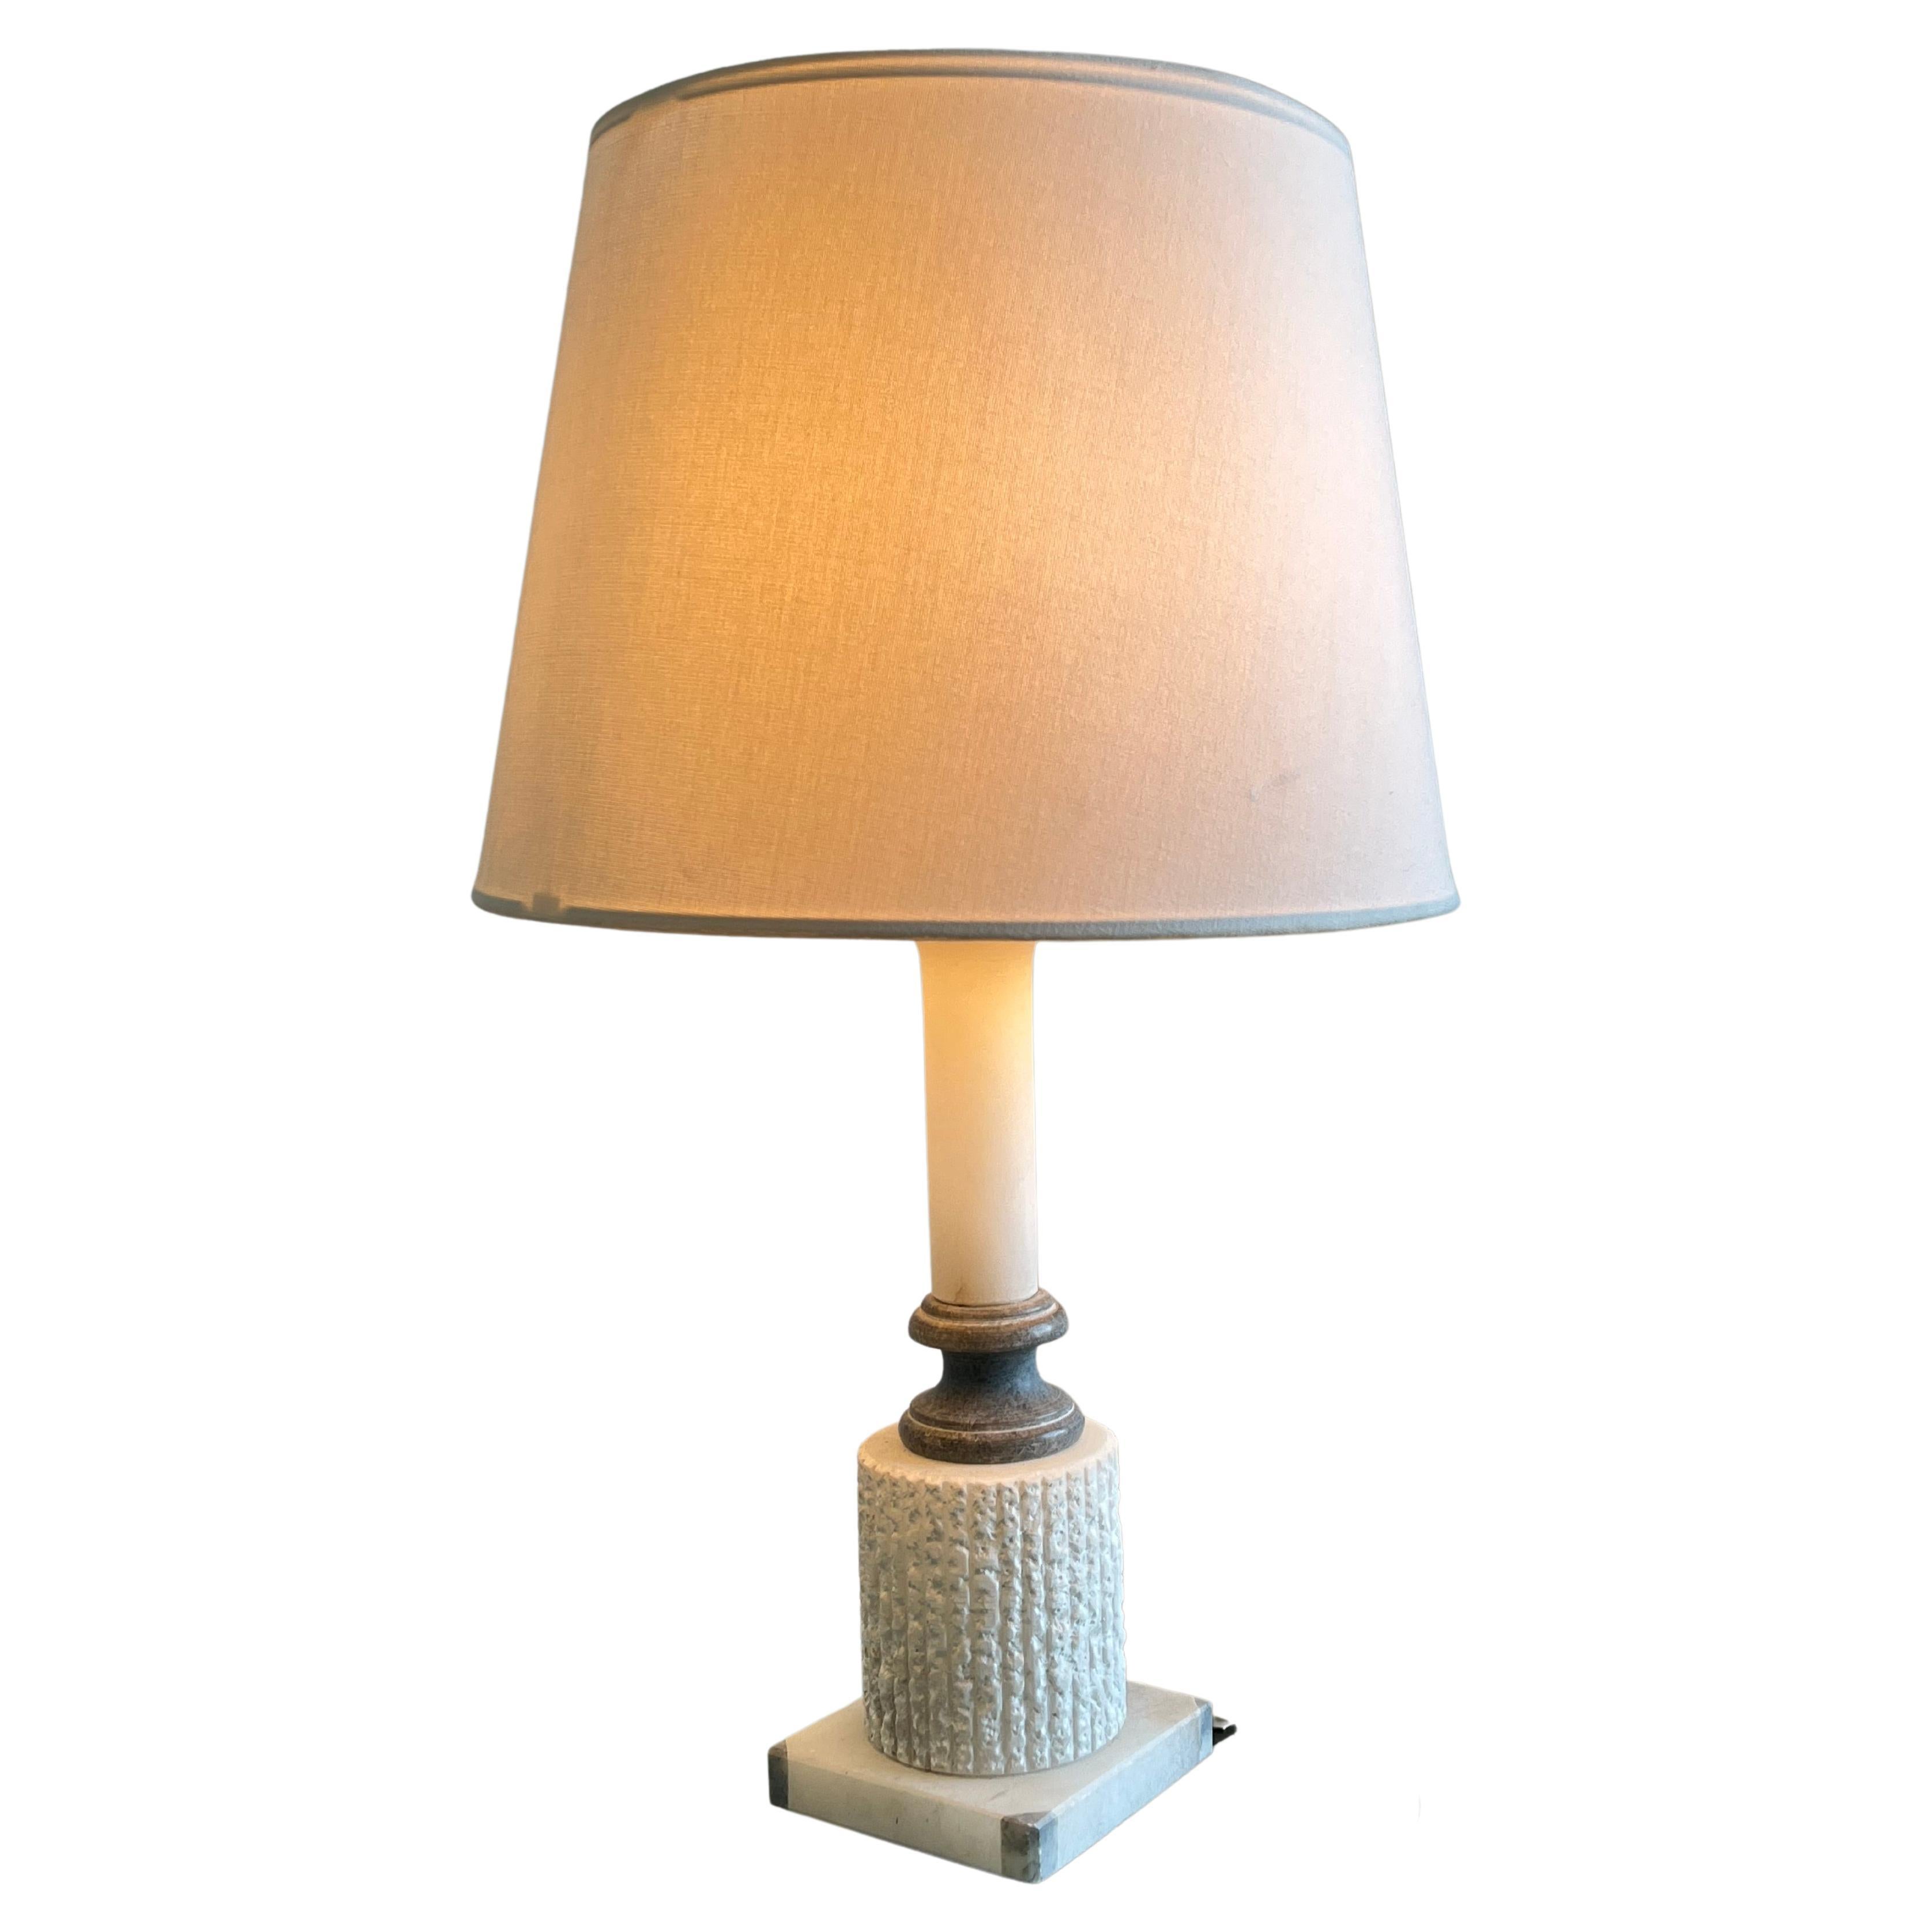 Italian Marble Table Lamp